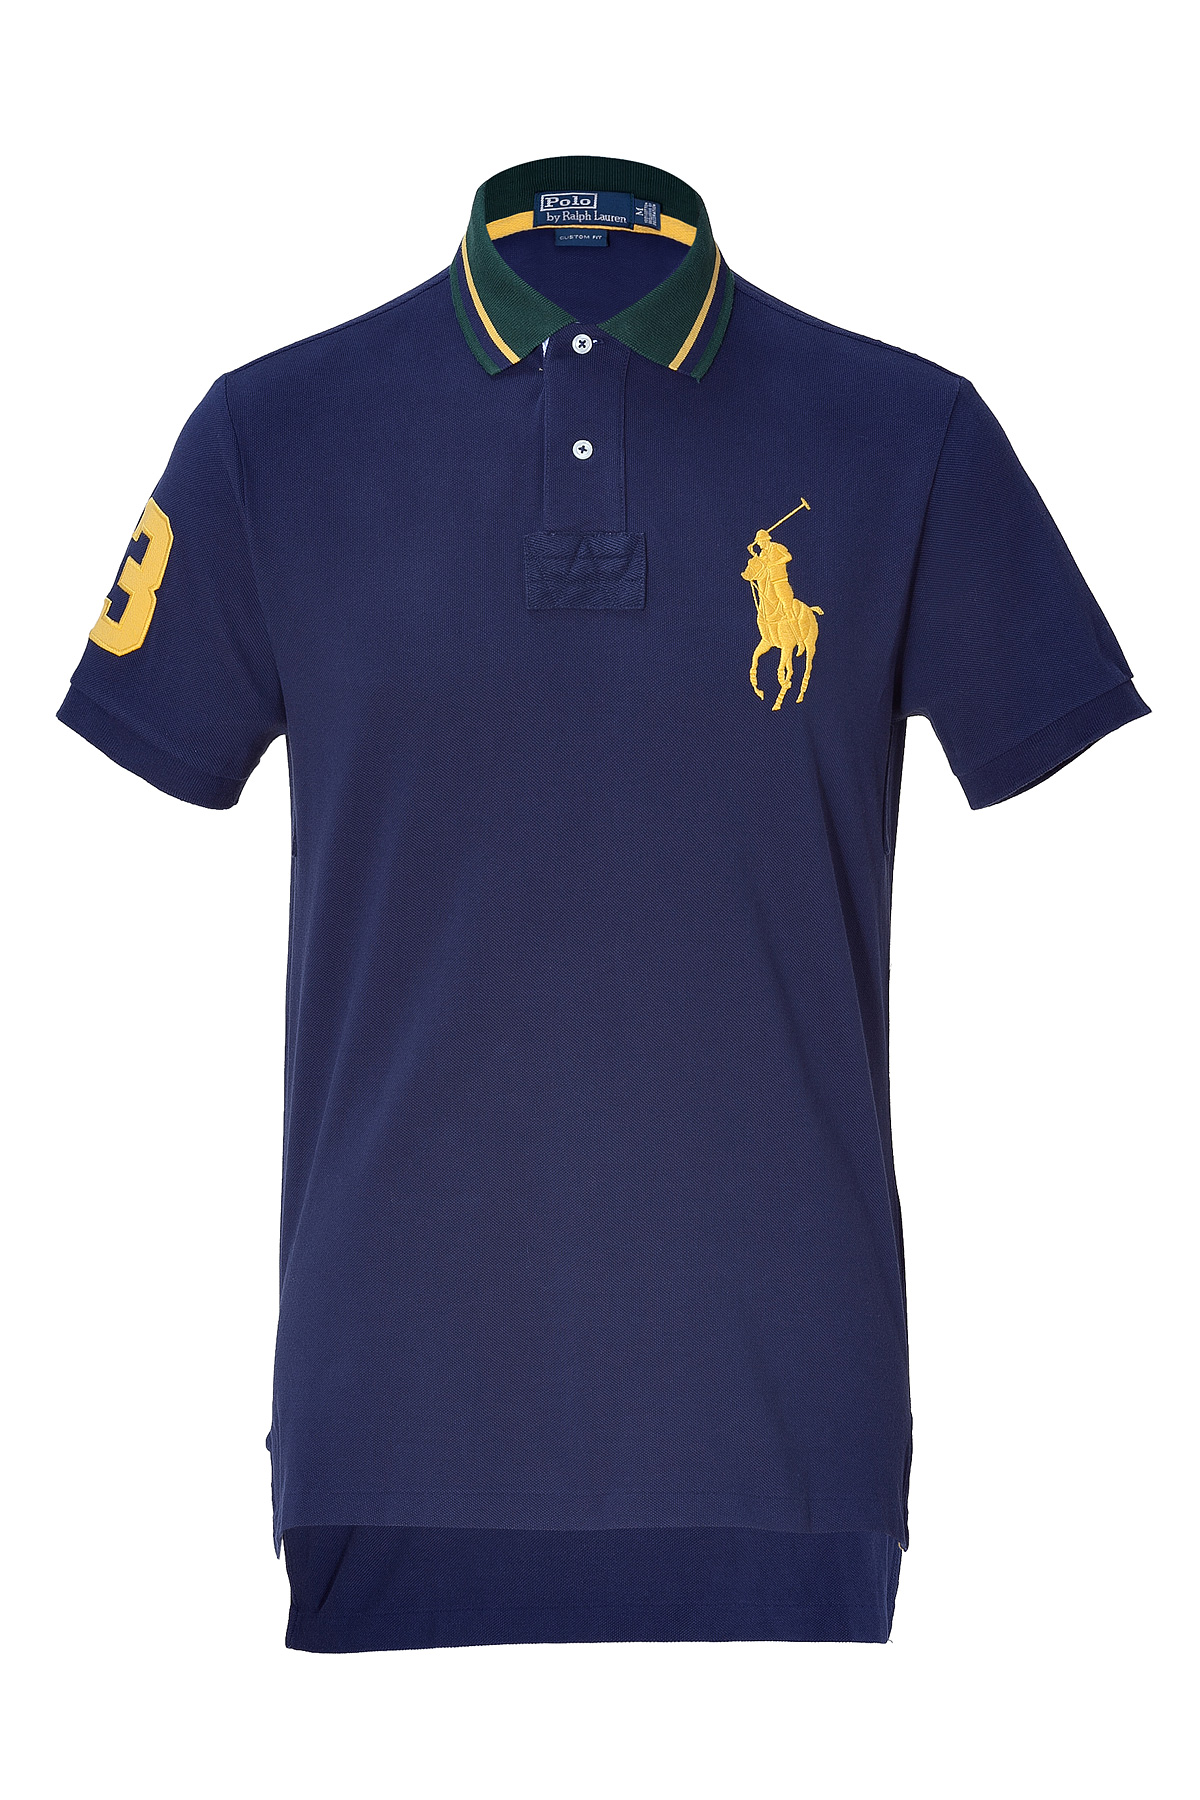 Lyst Polo Ralph  Lauren Big Logo Polo  Shirt in Blue for Men